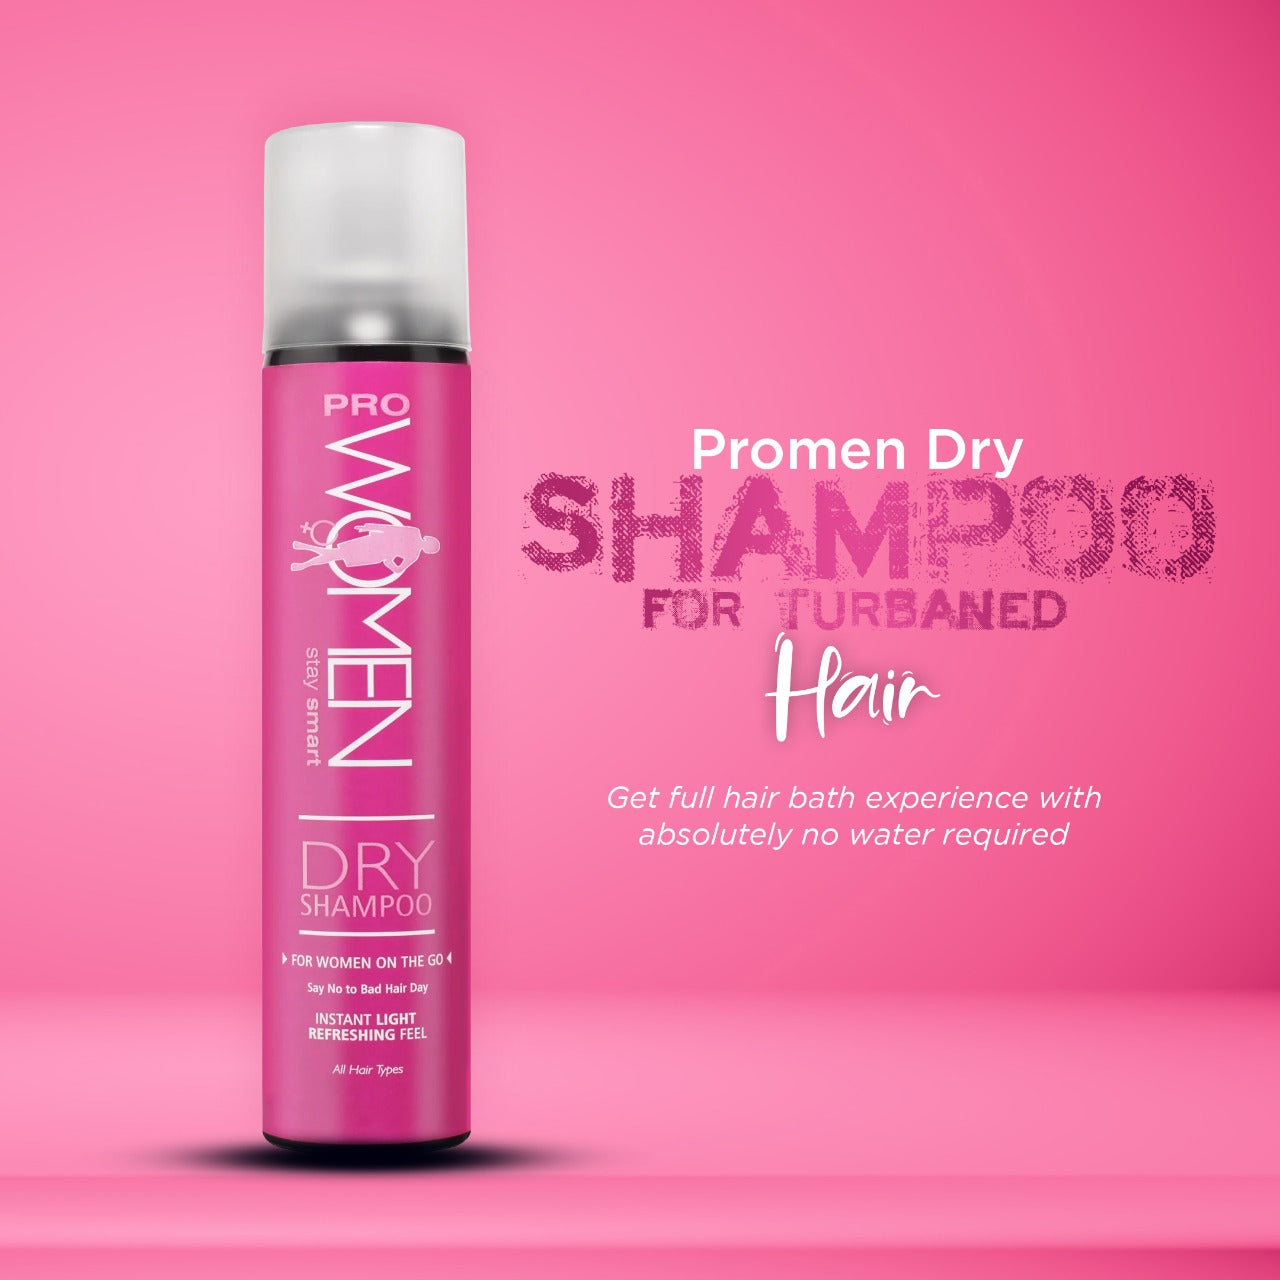 Prowomen Dry Shampoo